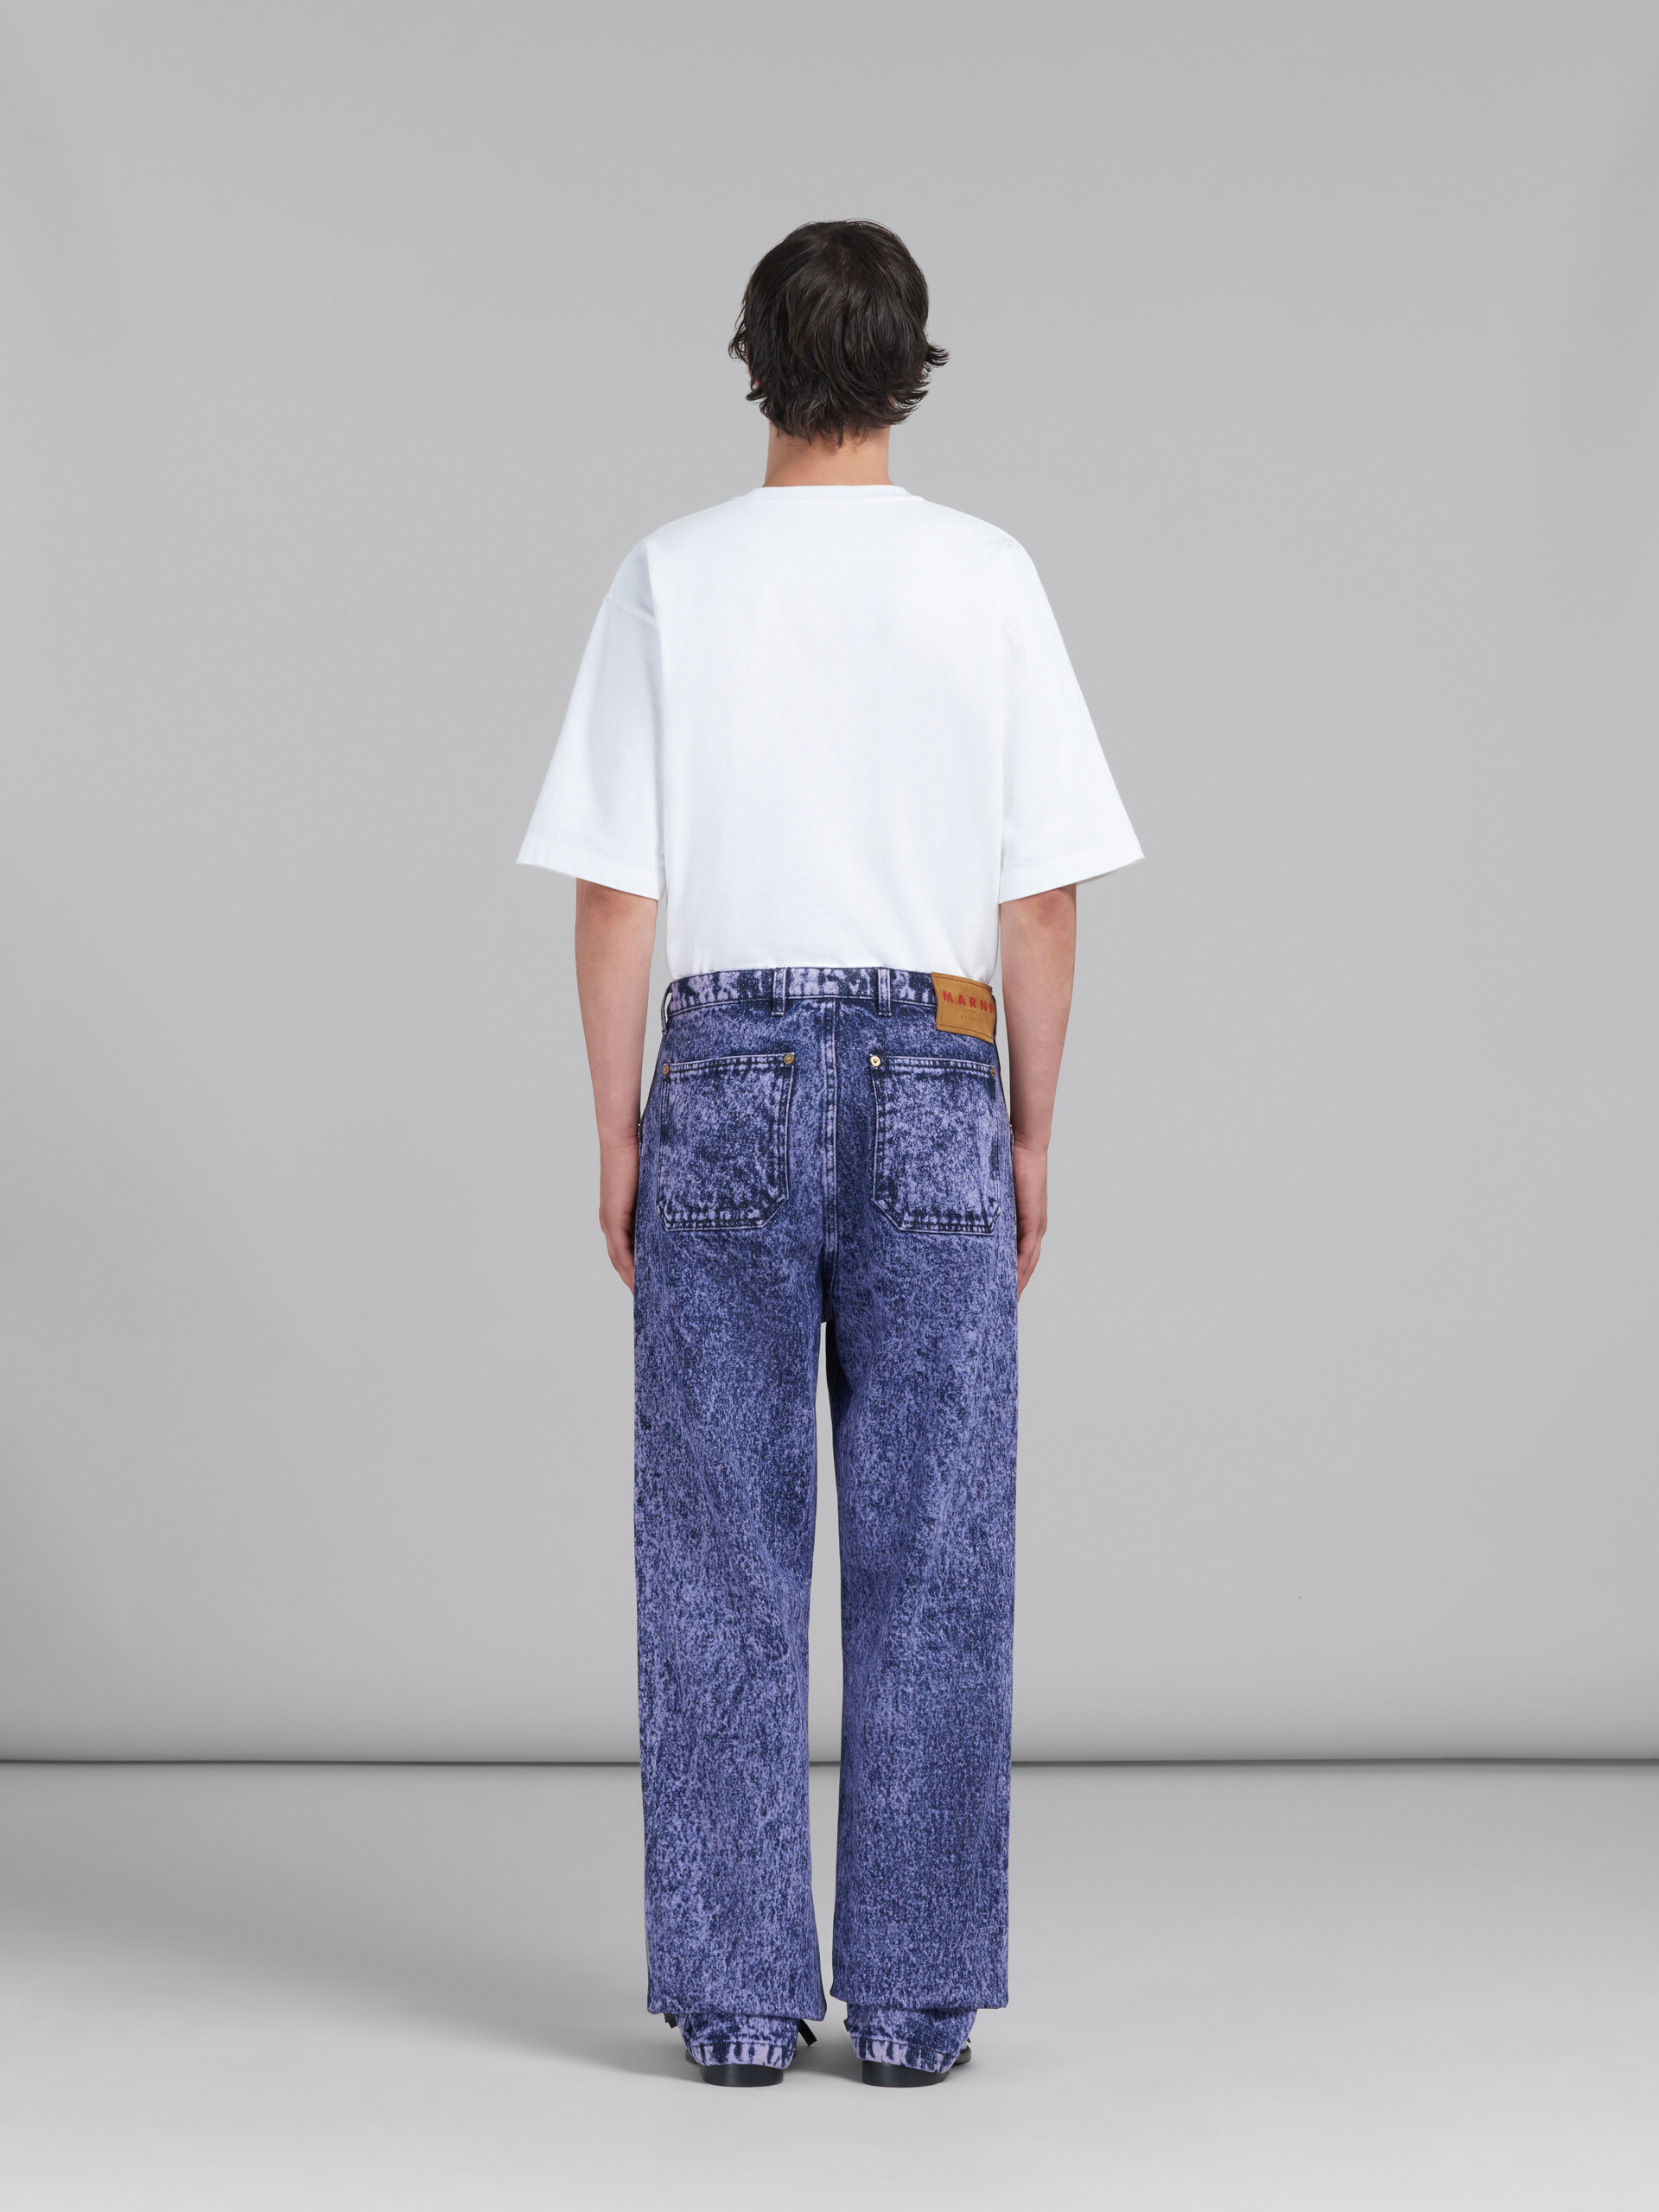 Baue Denim-Jeans mit marmoriertem Finish - Hosen - Image 3